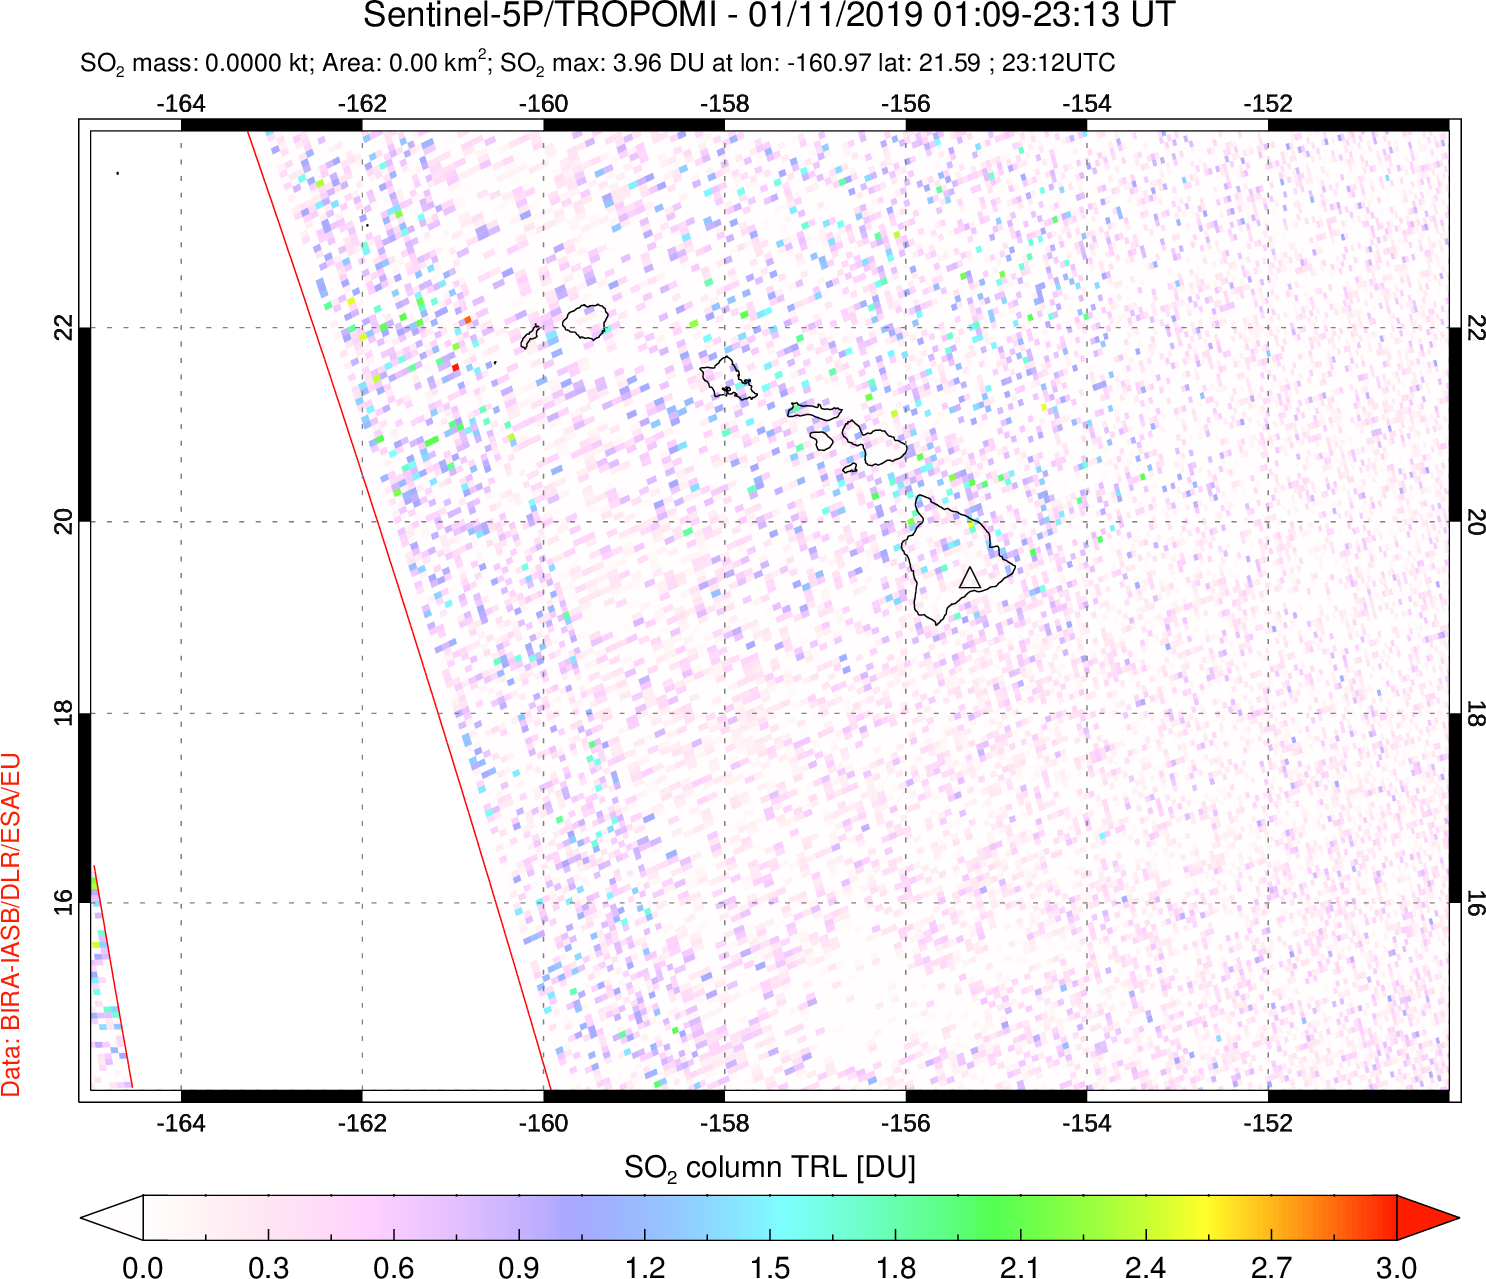 A sulfur dioxide image over Hawaii, USA on Jan 11, 2019.